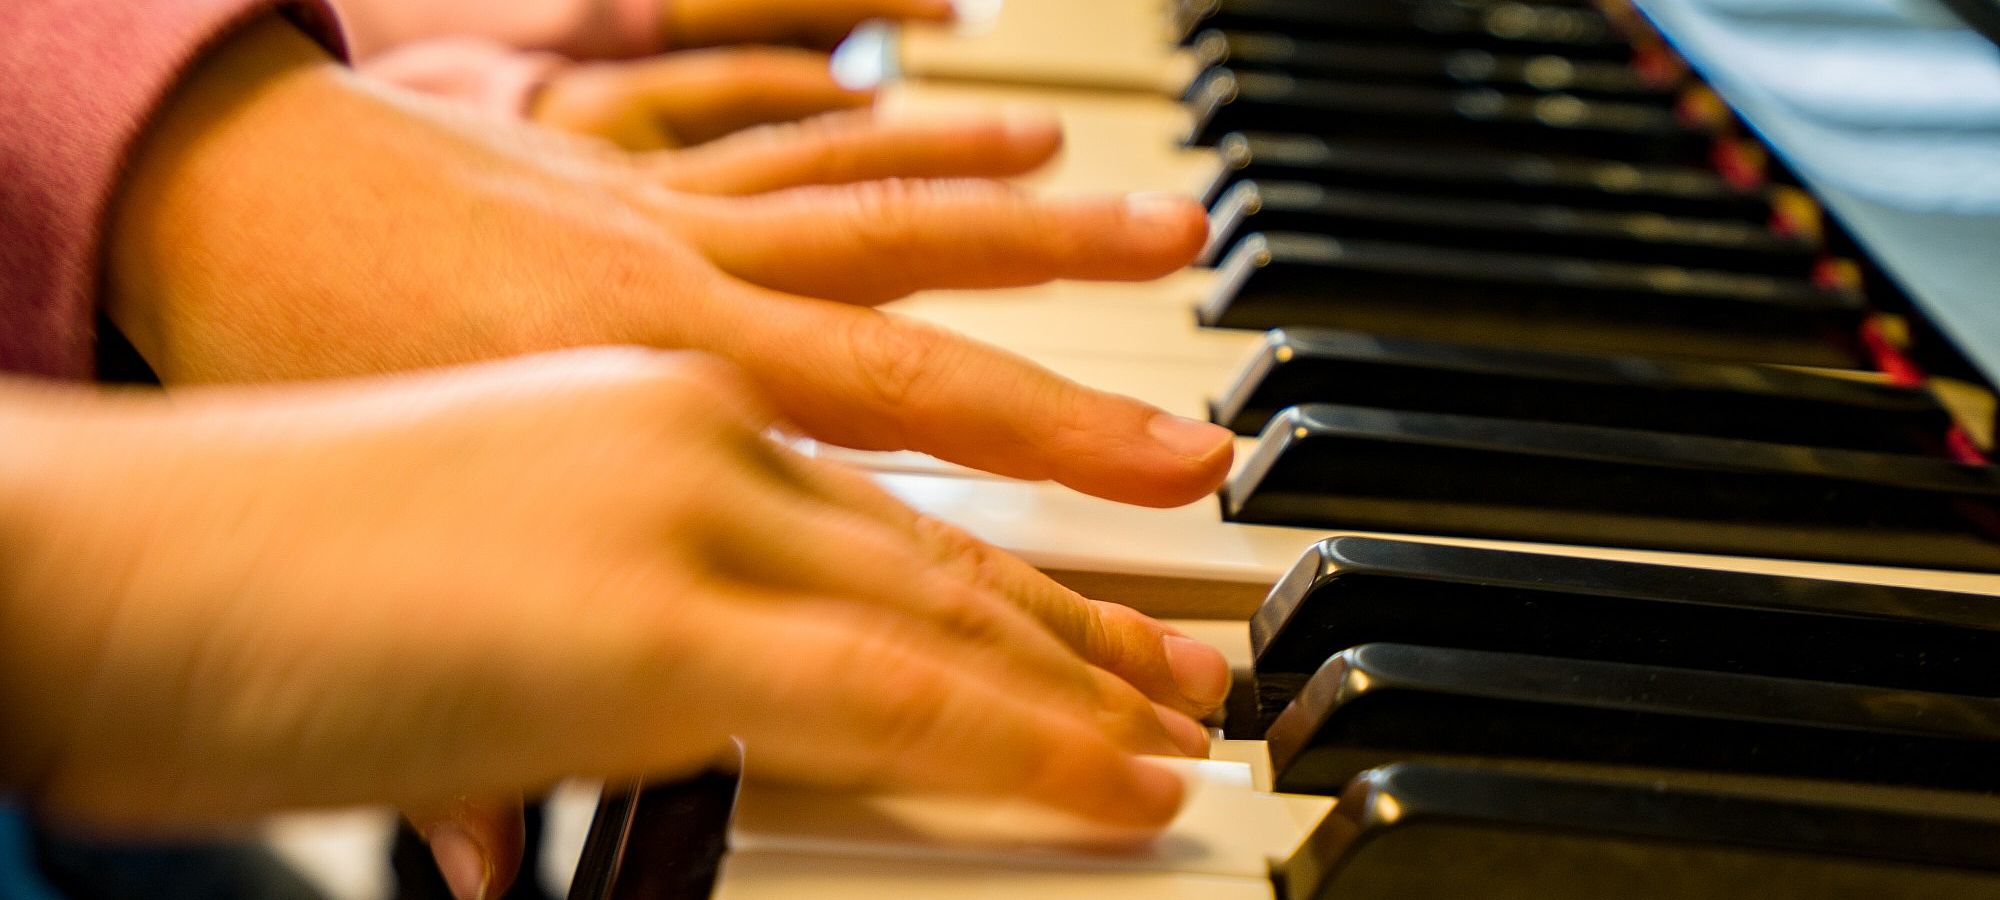 Klavier spielen lernen an der Musikschule Wedel